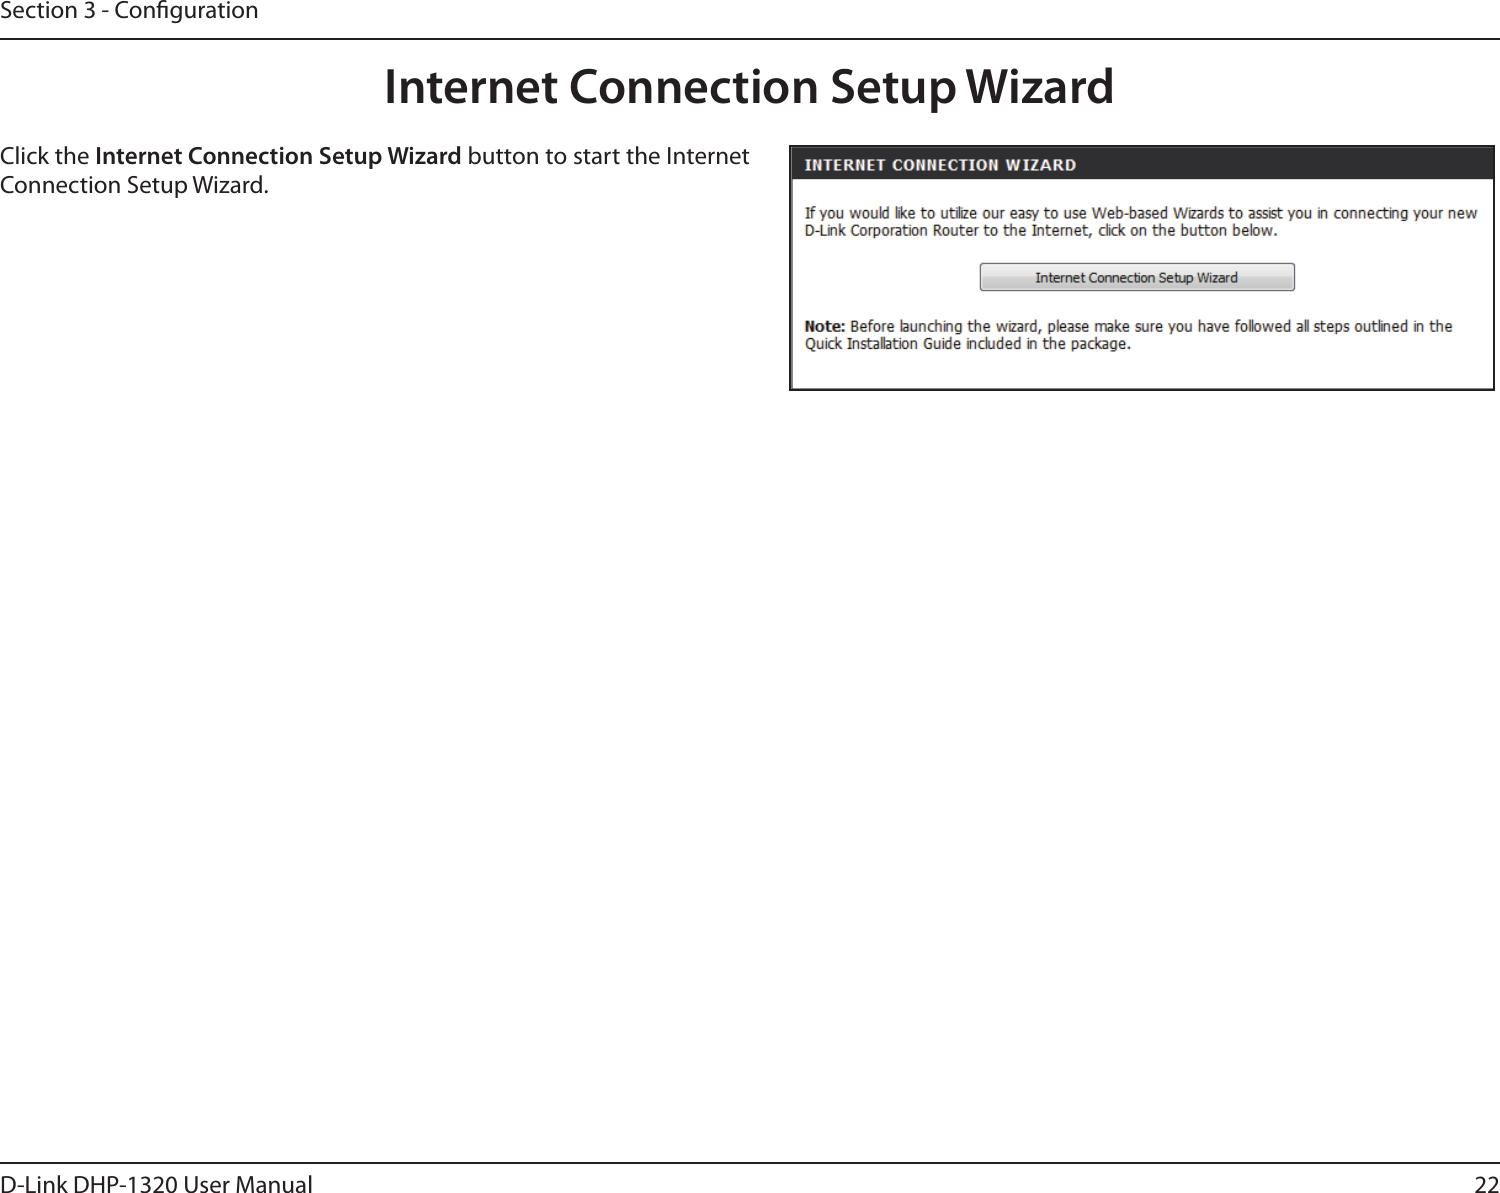 22D-Link DHP-1320 User ManualSection 3 - CongurationInternet Connection Setup WizardClick the Internet Connection Setup Wizard button to start the Internet Connection Setup Wizard.